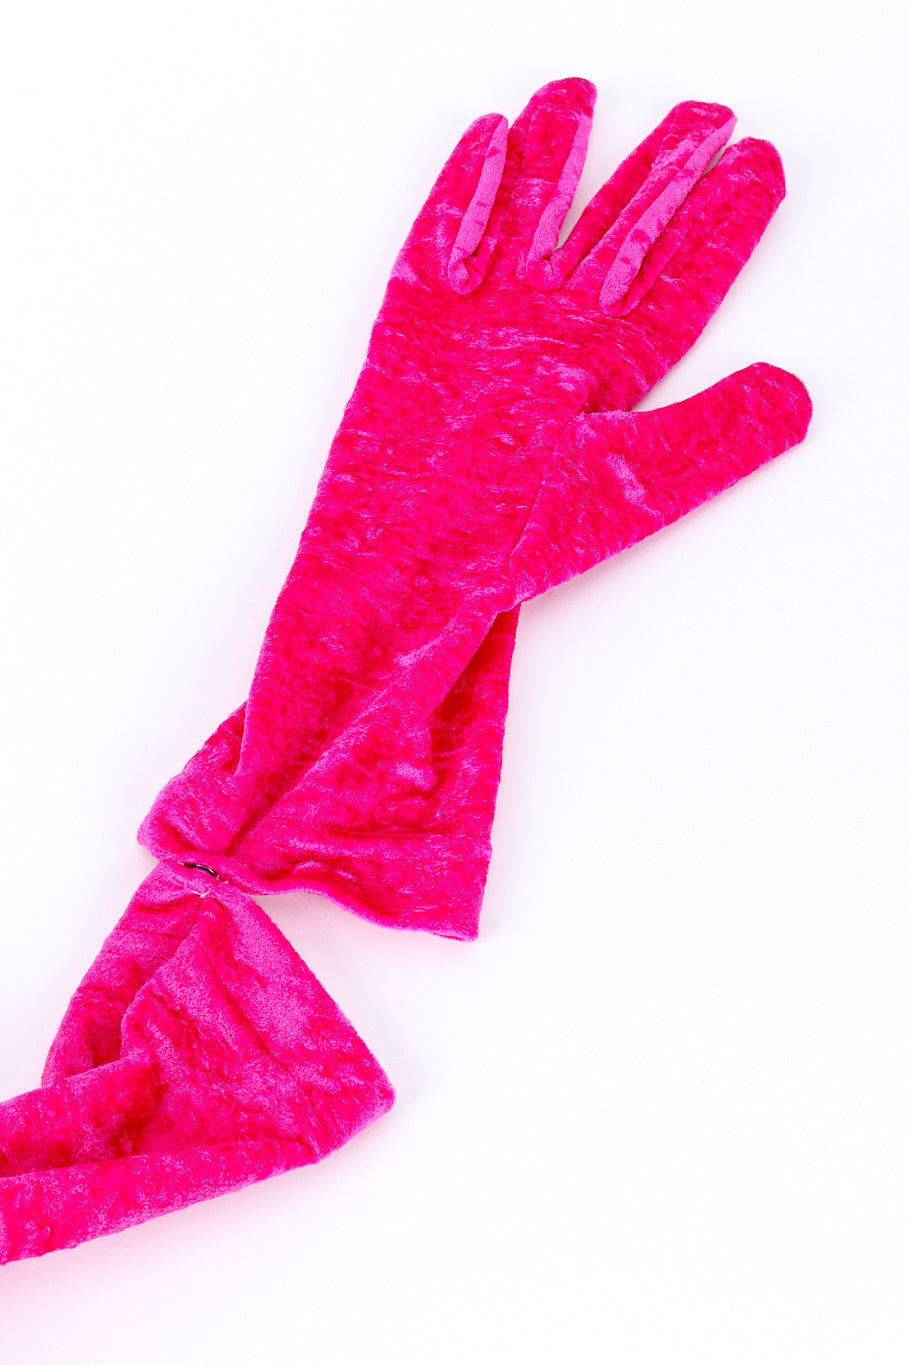 Balenciaga Velvet Turtleneck with Gloves view of glove on white background closeup @Recessla